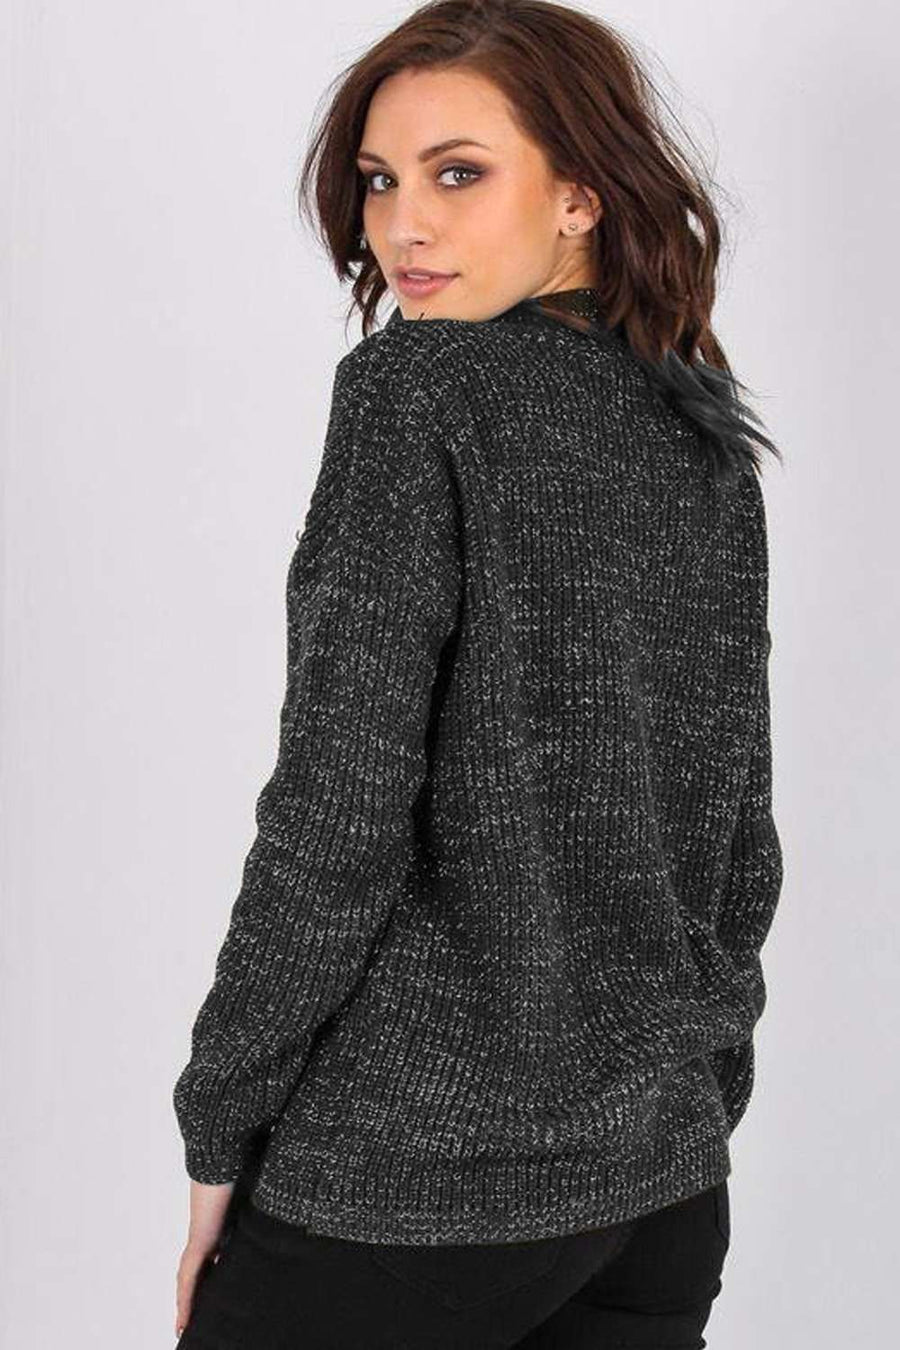 Sufiyah Choker Neck Oversized Knitted Jumper - bejealous-com